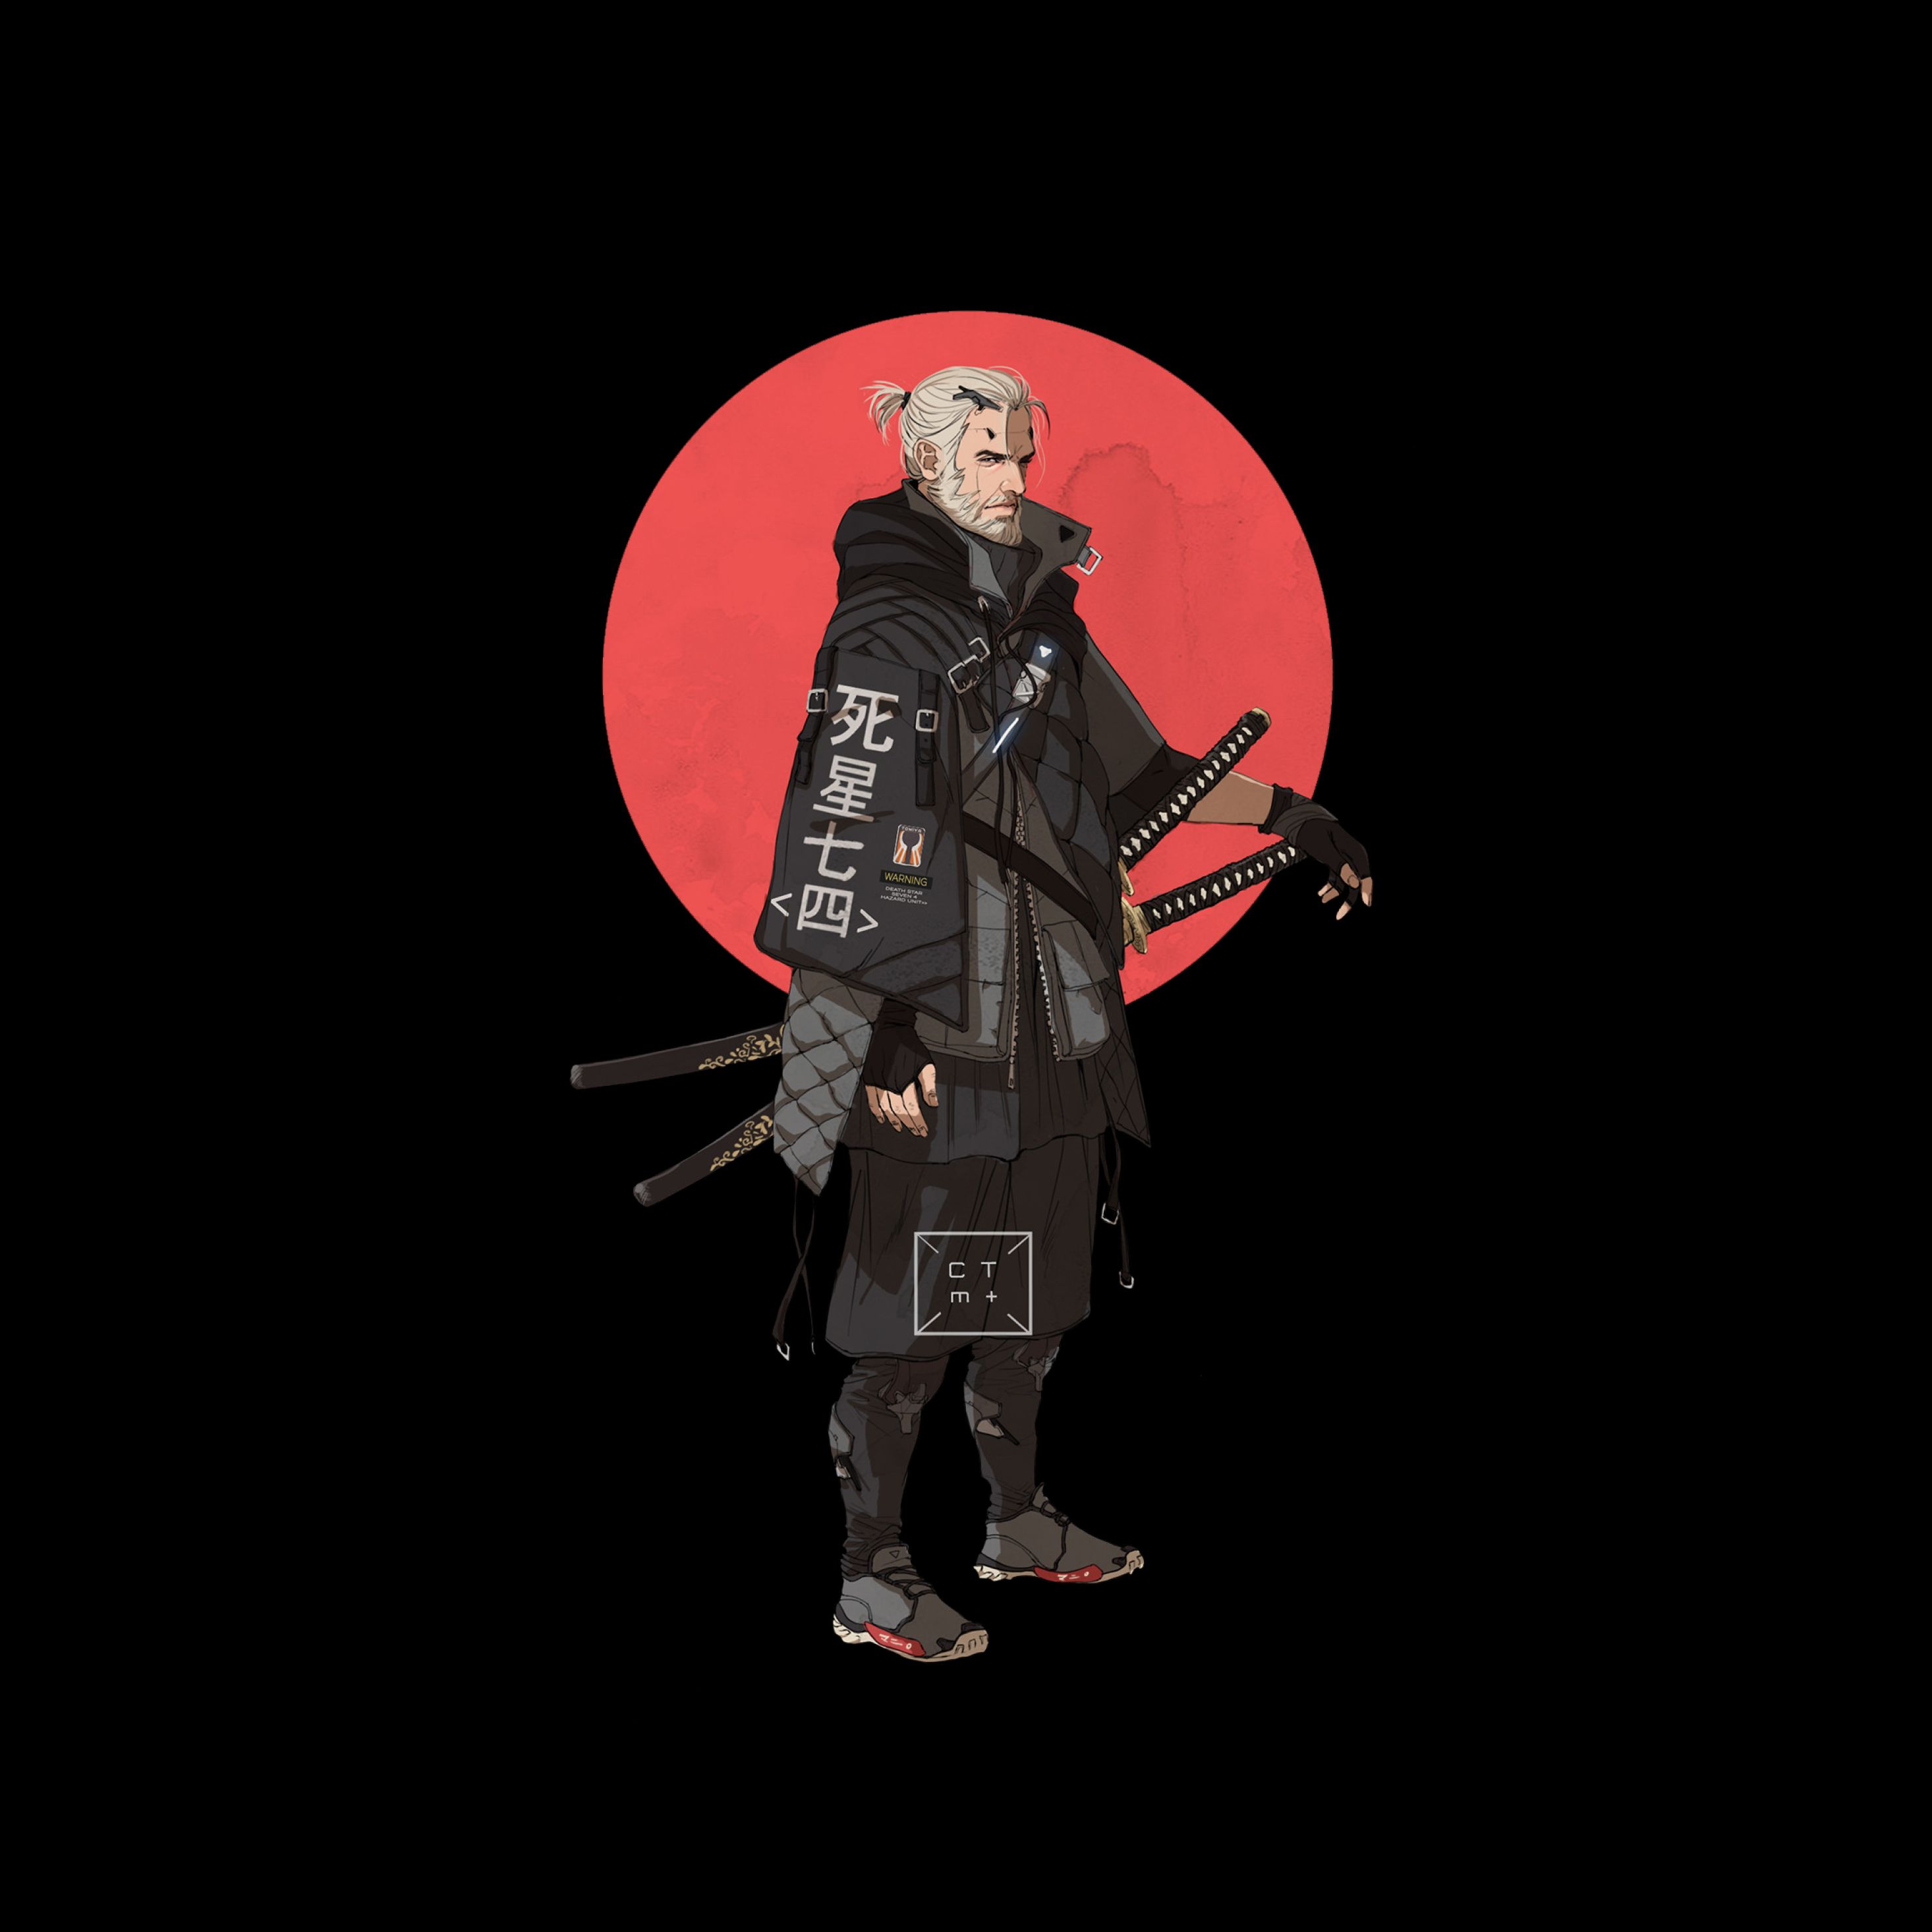 Geralt Witcher Minimal 4K iPad Pro Retina Display Wallpaper, HD Minimalist 4K Wallpaper, Image, Photo and Background